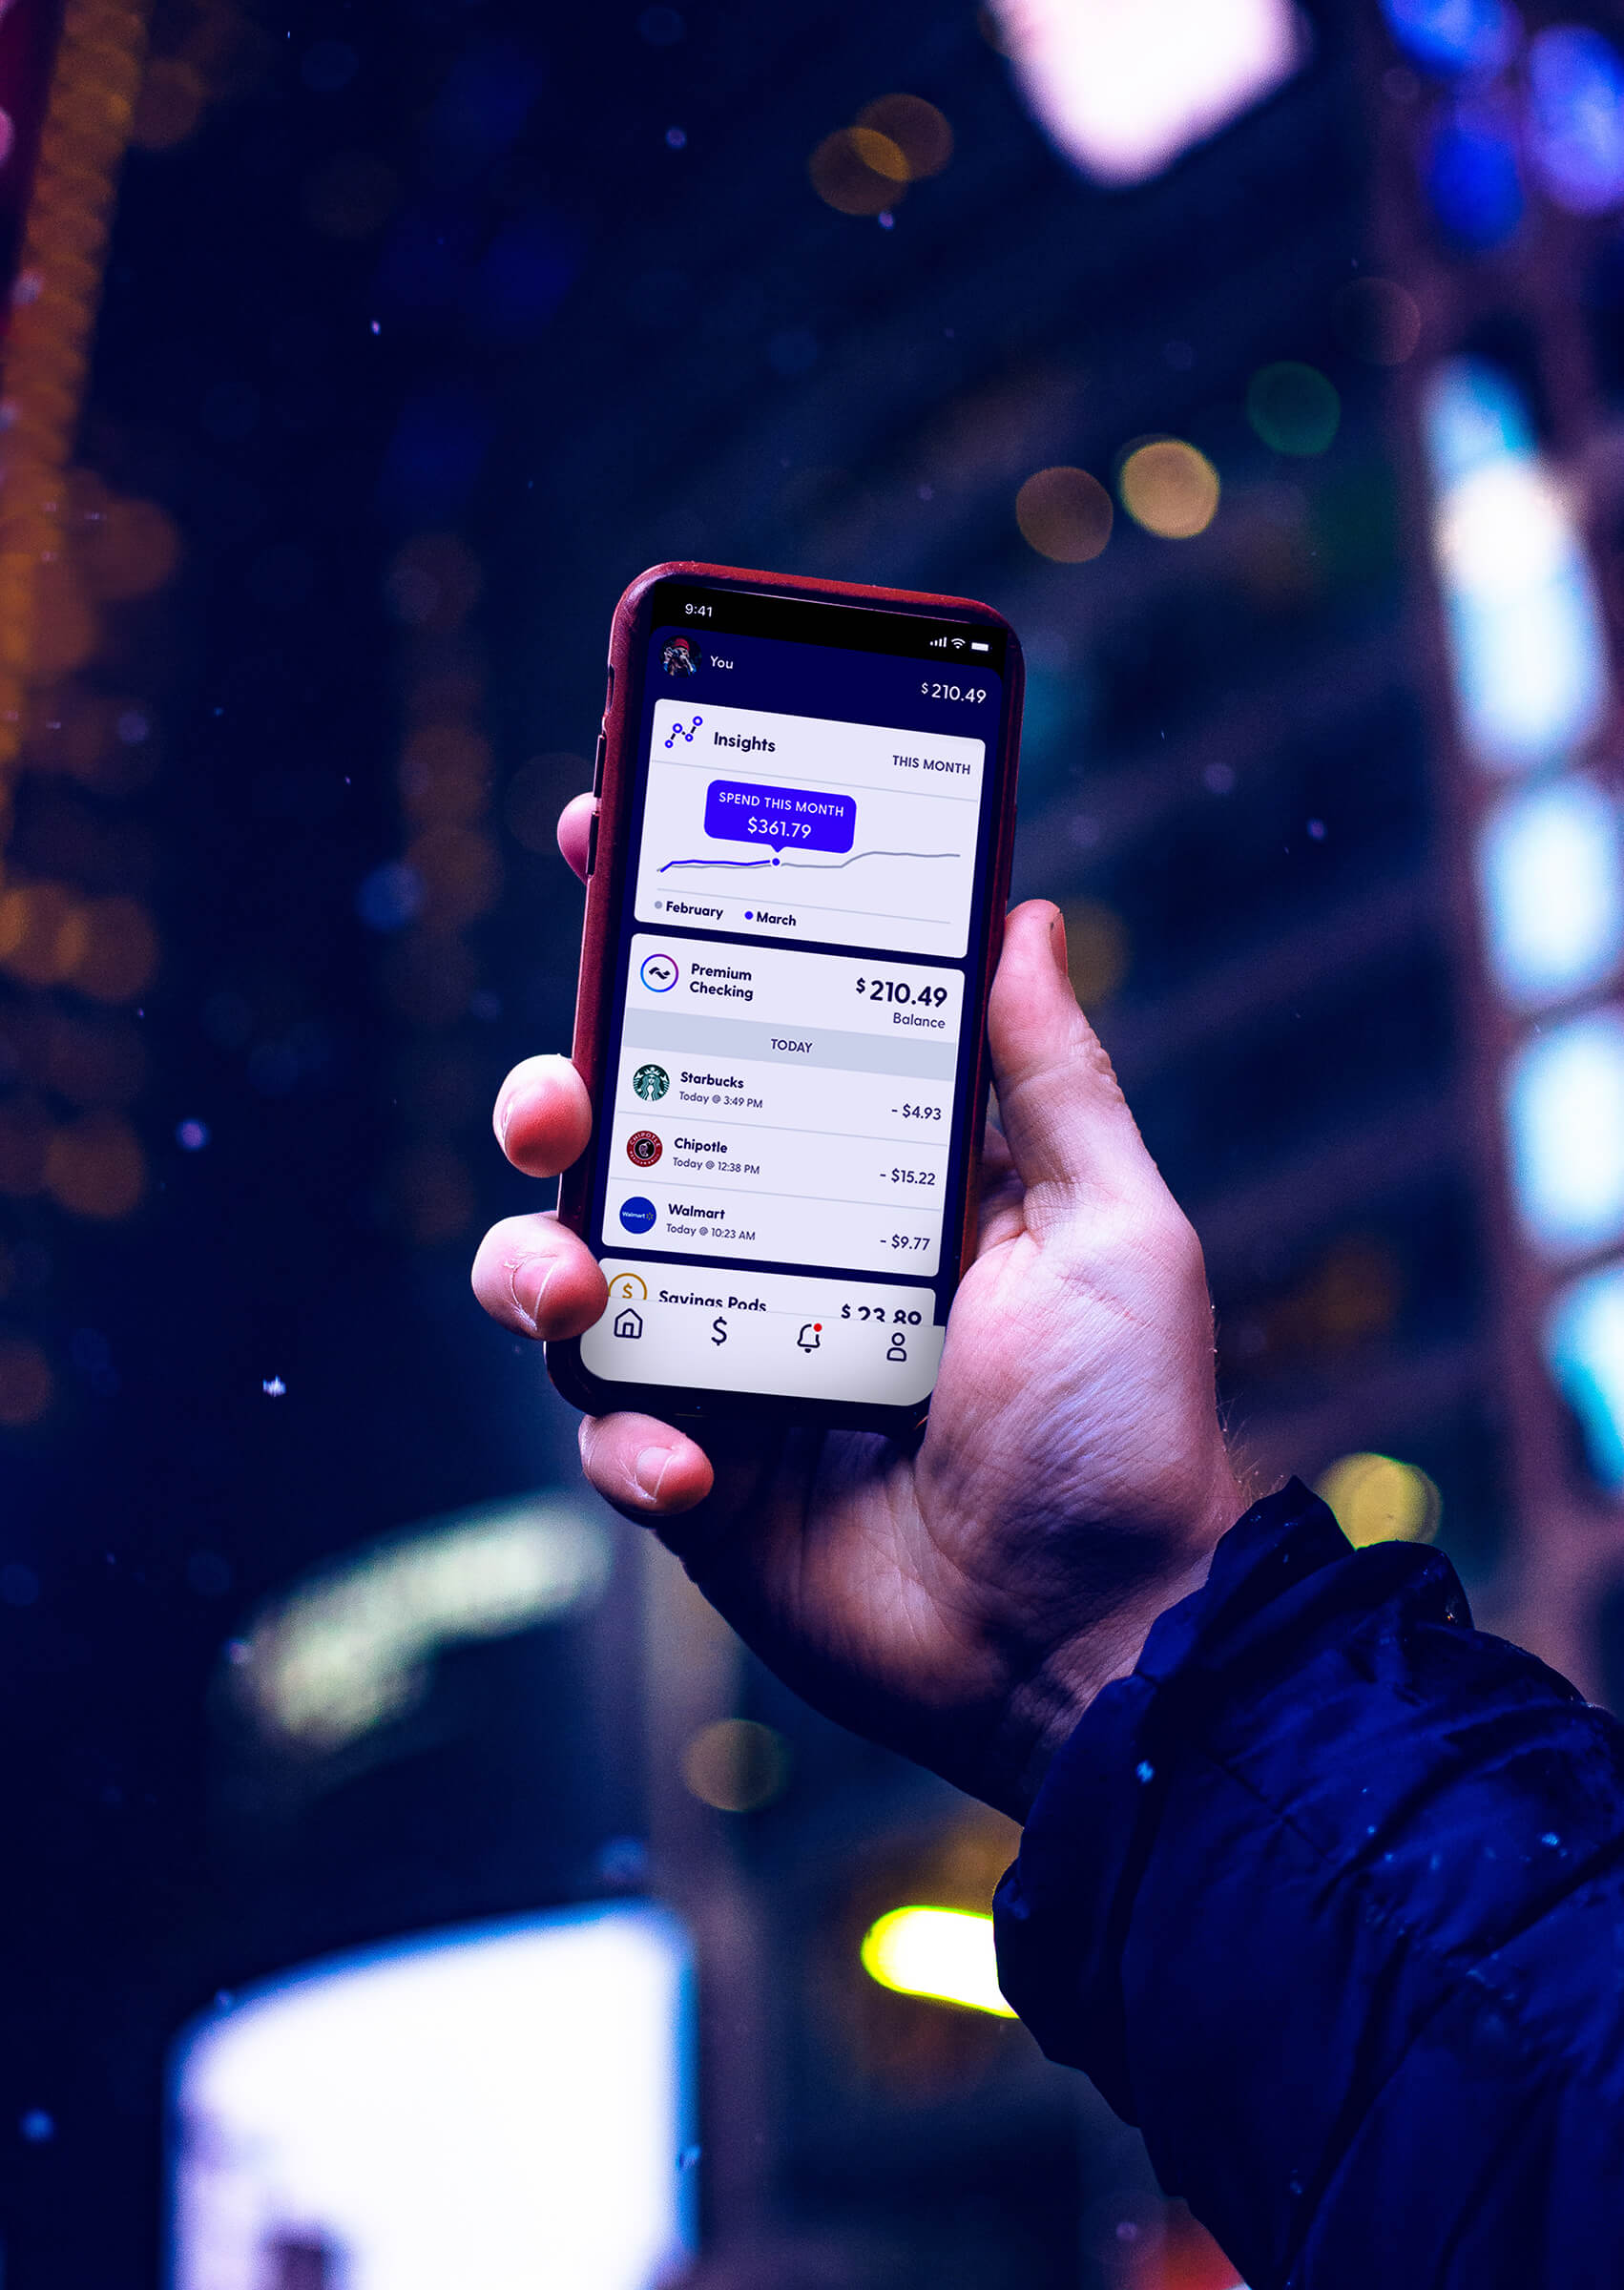 Mobile banking app Current raises 20M Series B, tops half a million users • TechCrunch